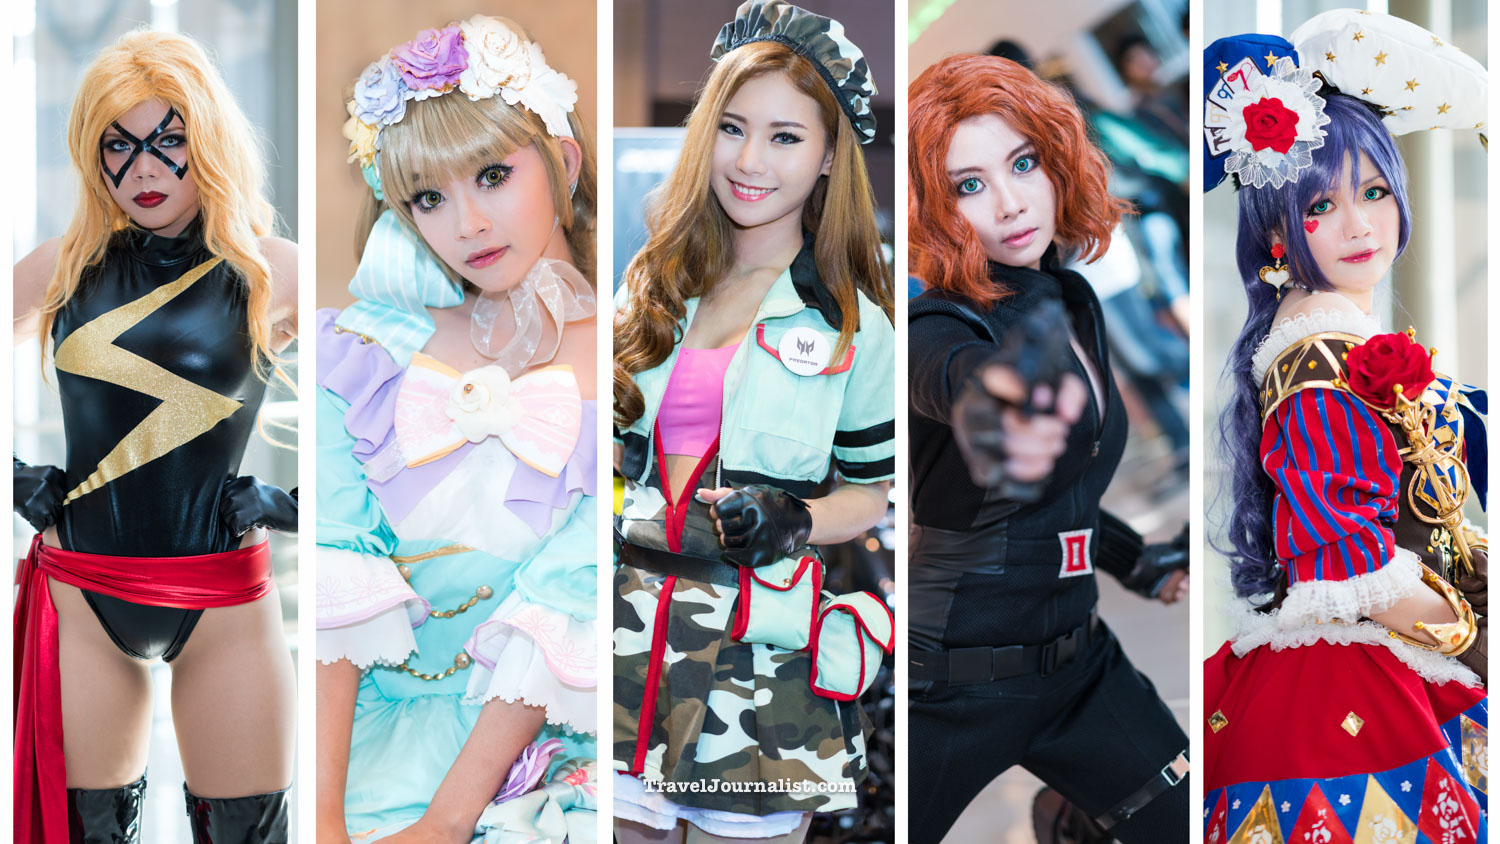 Thailand Comic Con 2016 Beautiful Cosplay Girls In